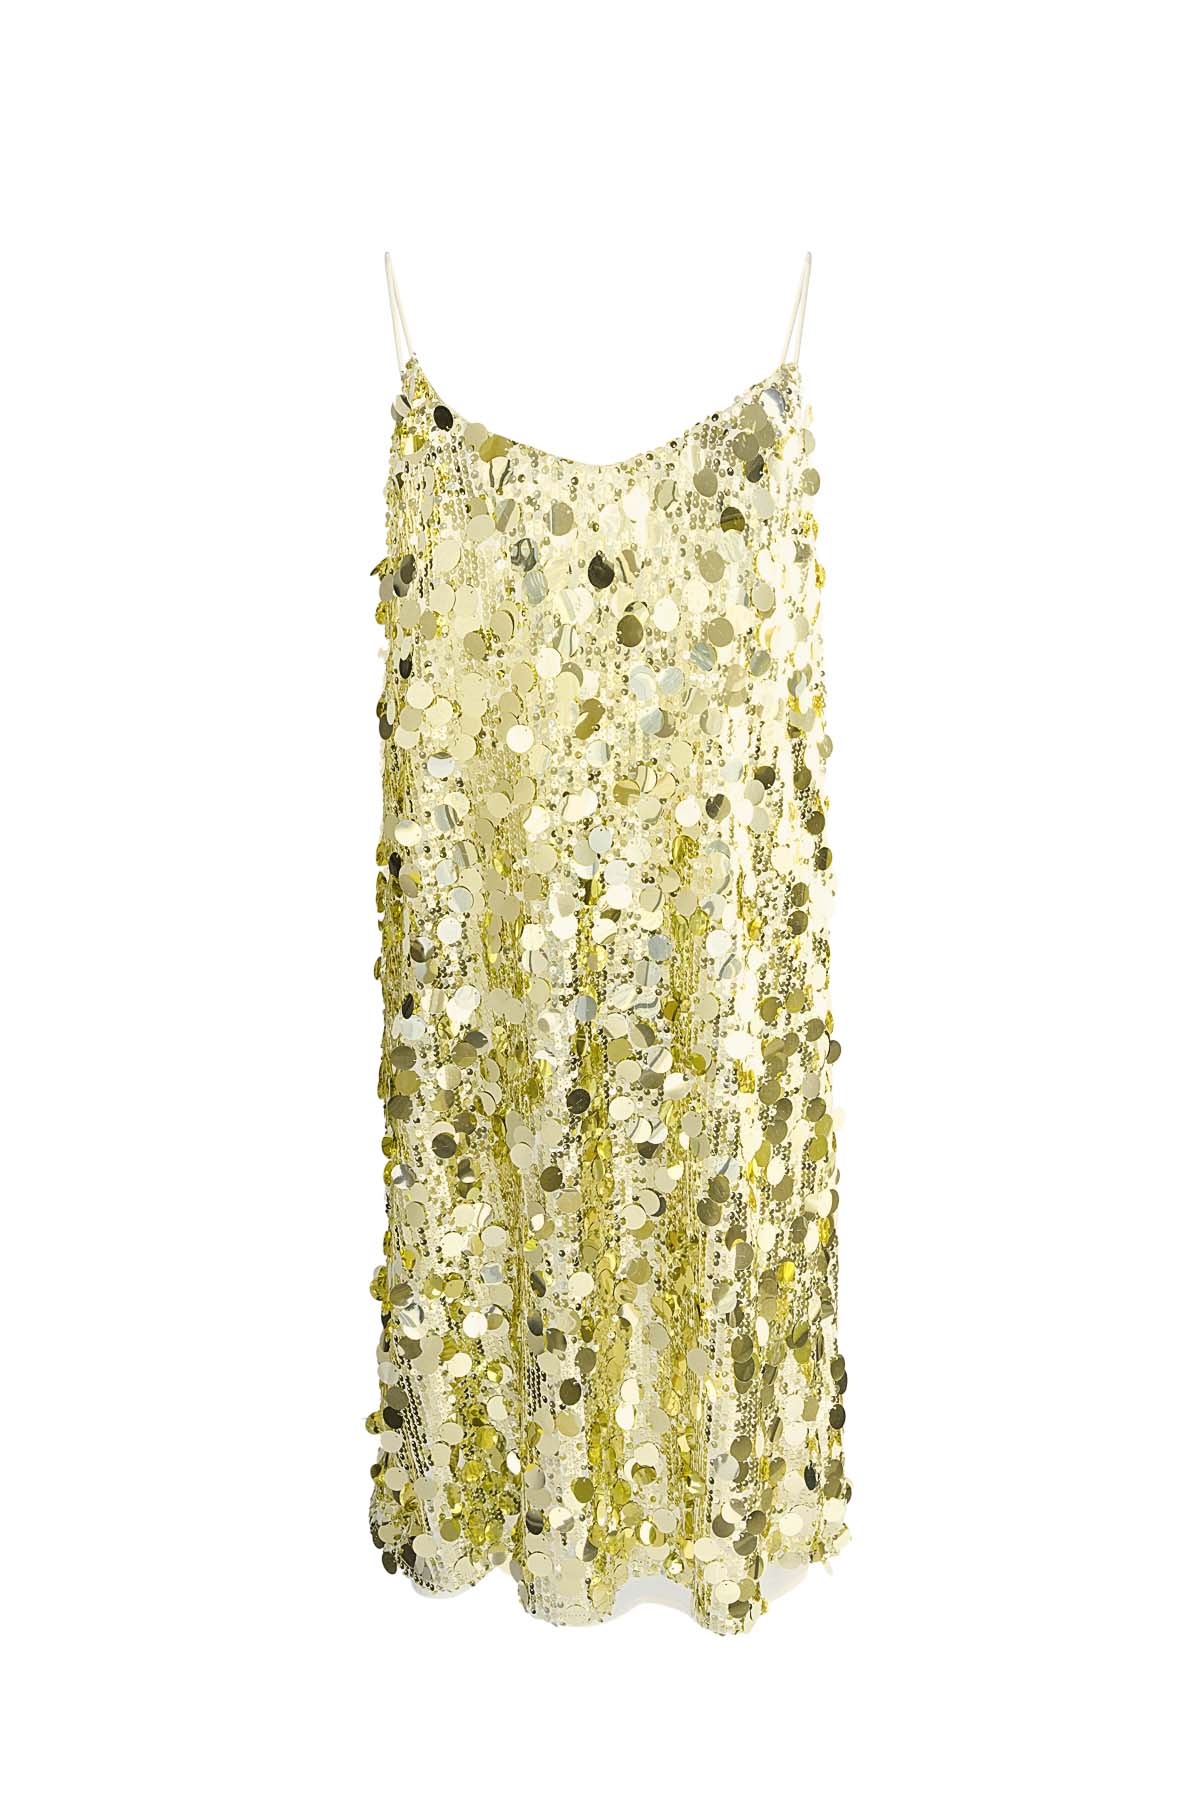 Sparkling dream glitter dress - gold